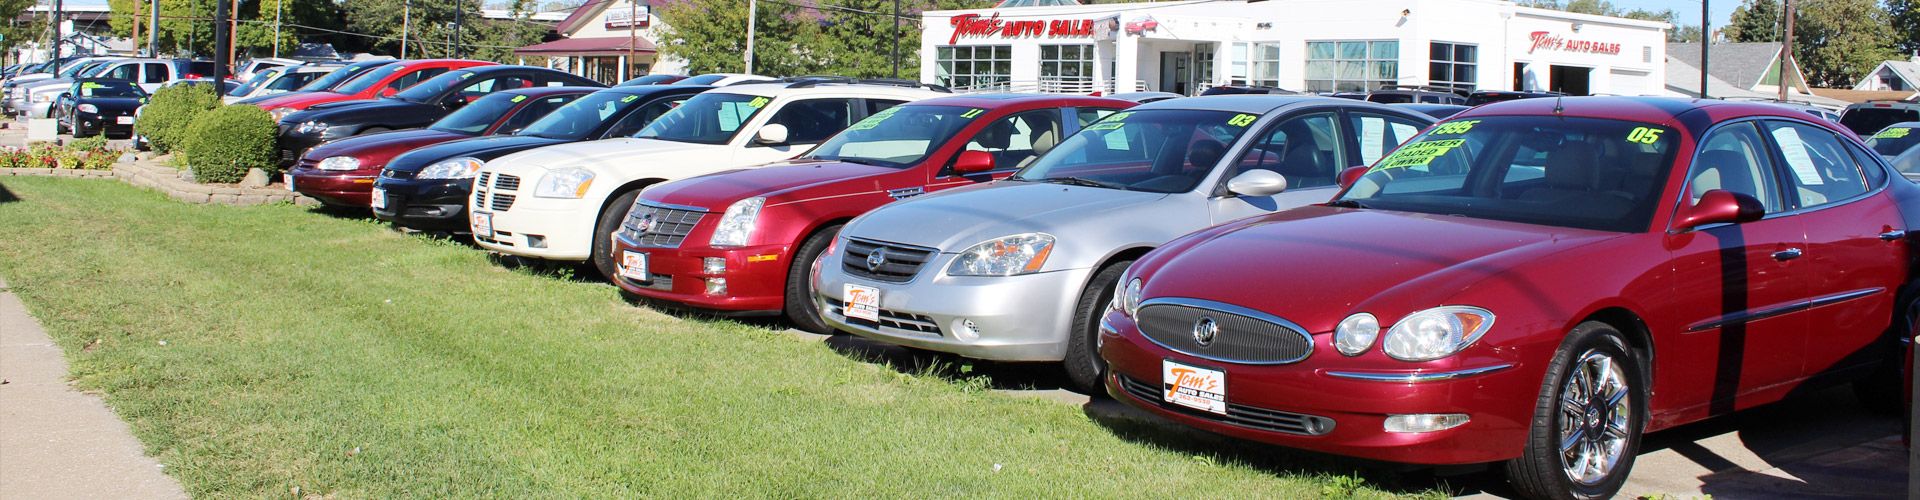 Car Dealerships On University Ave Des Moines Iowa ...